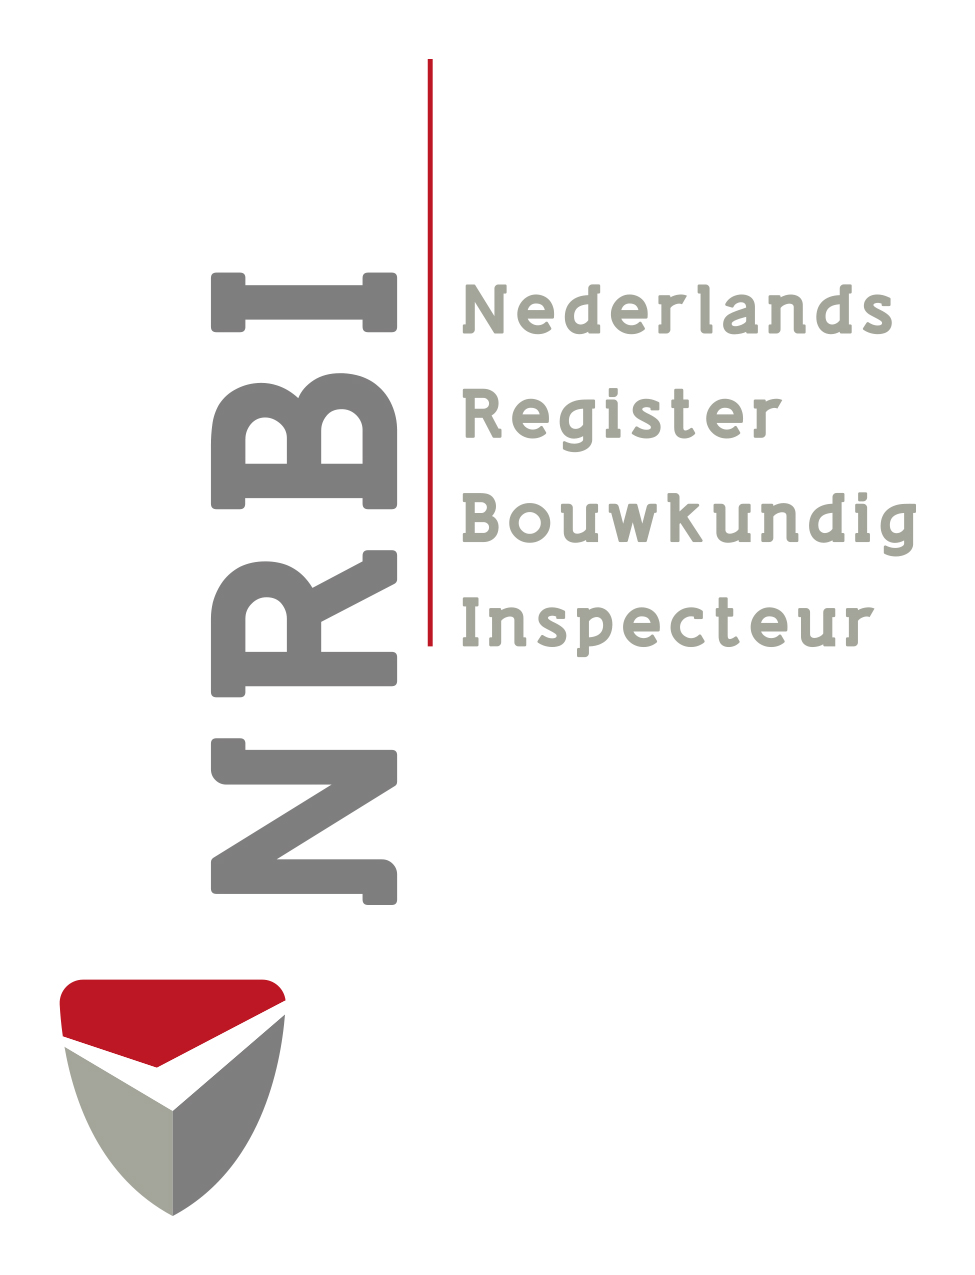 Samenwerking met online expertise register Nederlands Register bouwkundig inspecteurs NRBI